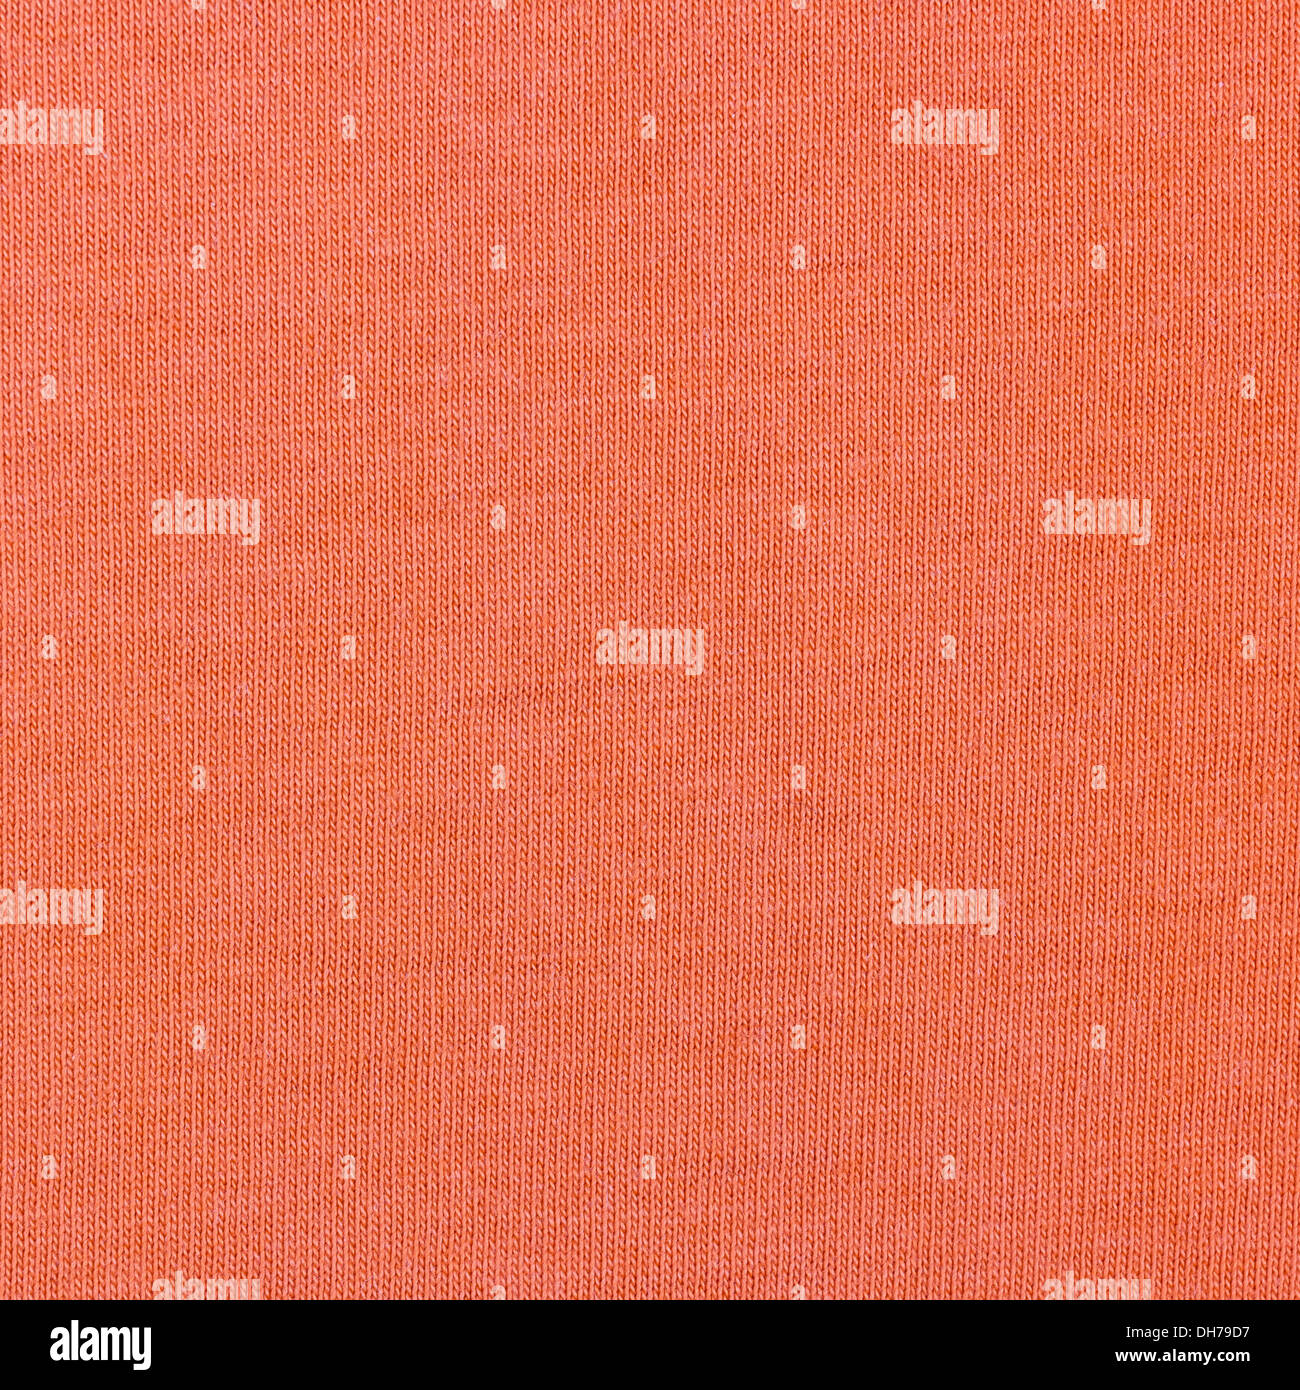 Orange fabric texture close up. Knitted netting Stock Photo